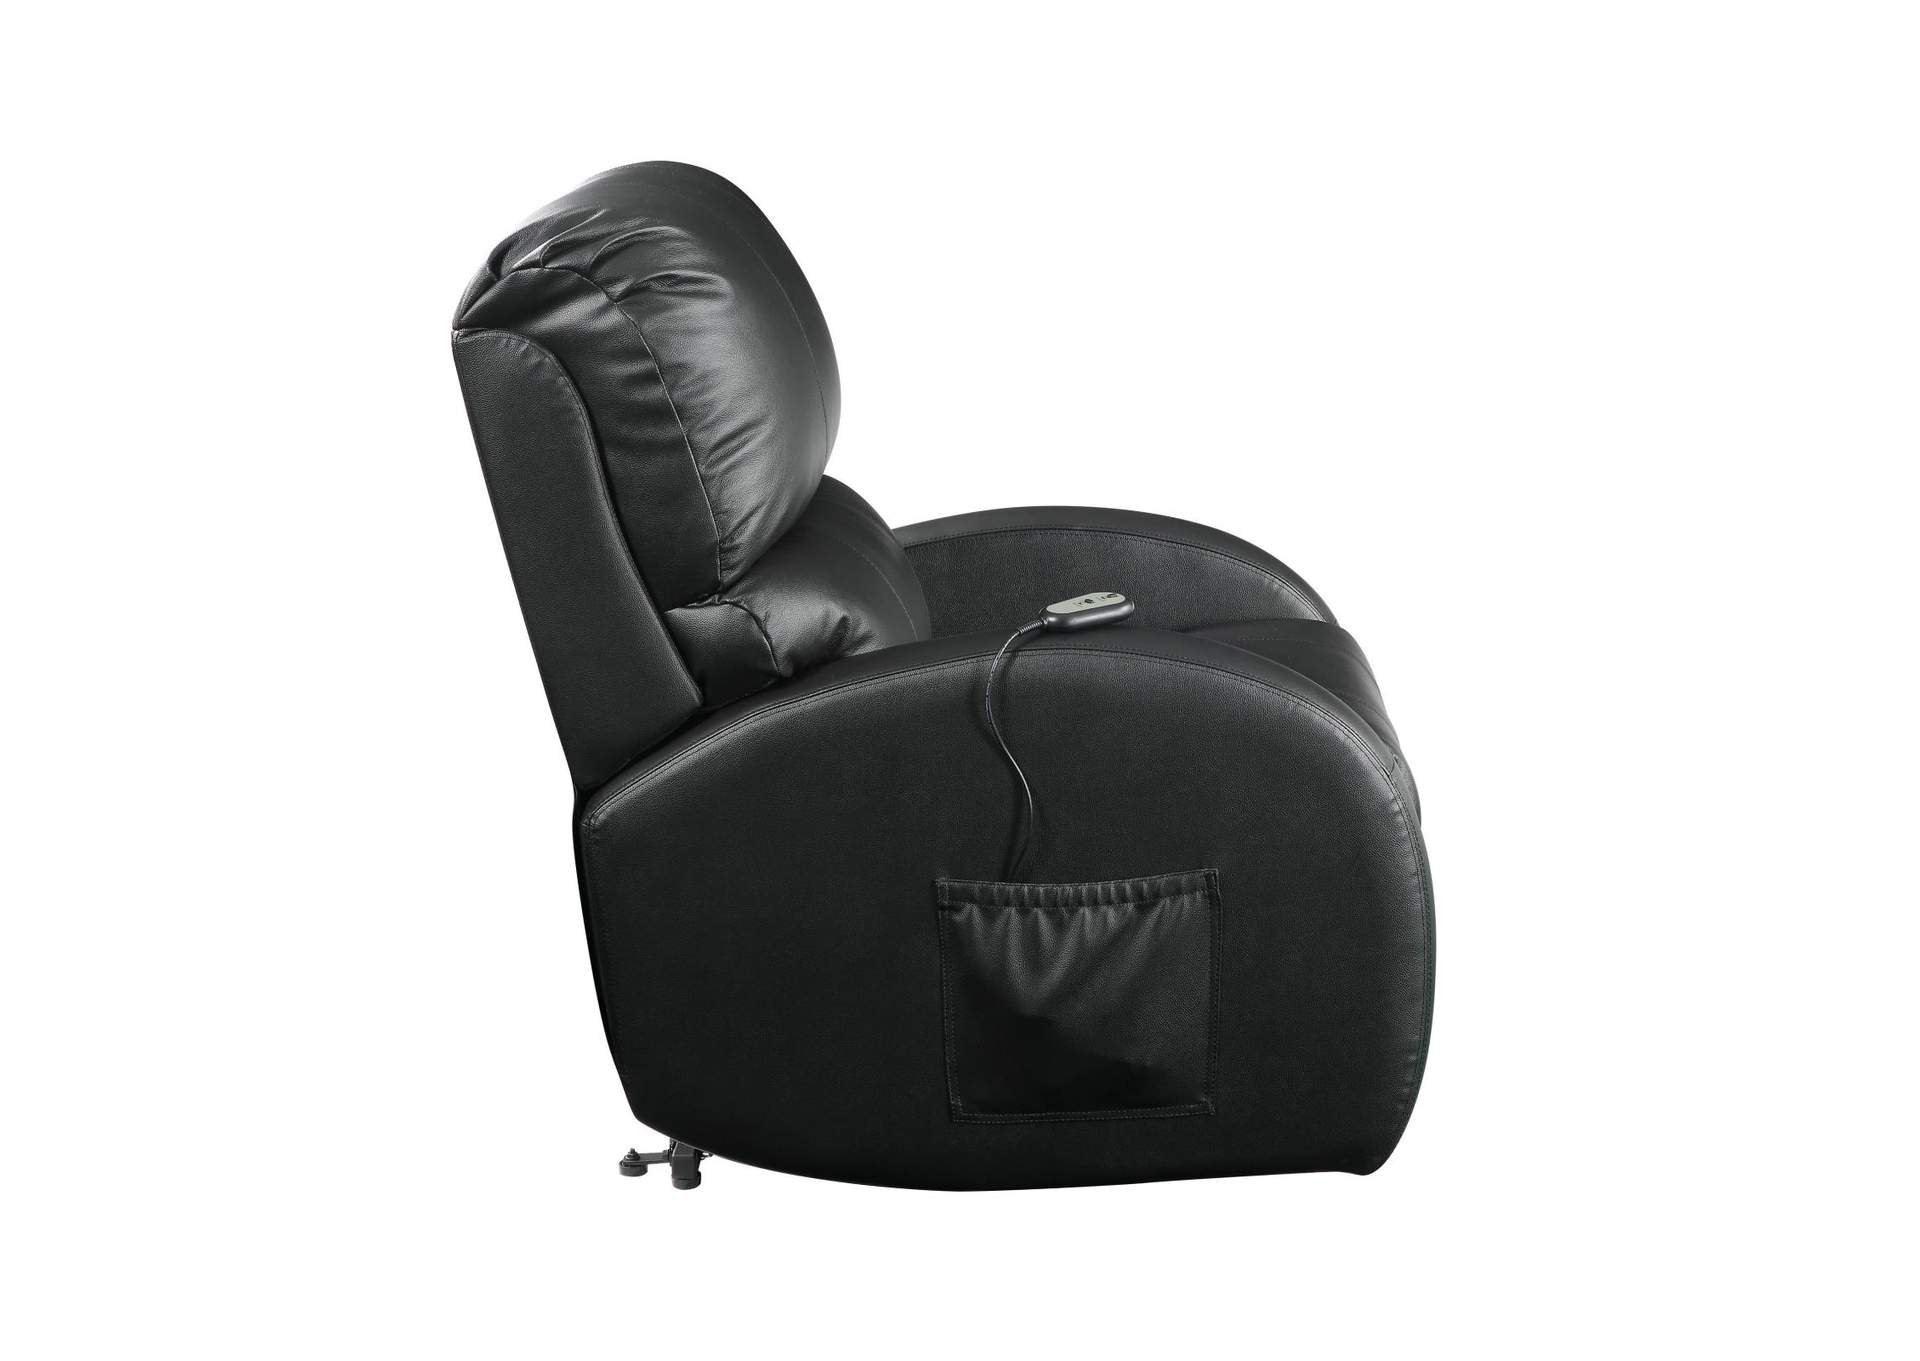 Upholstered Power Lift Recliner Black,Coaster Furniture